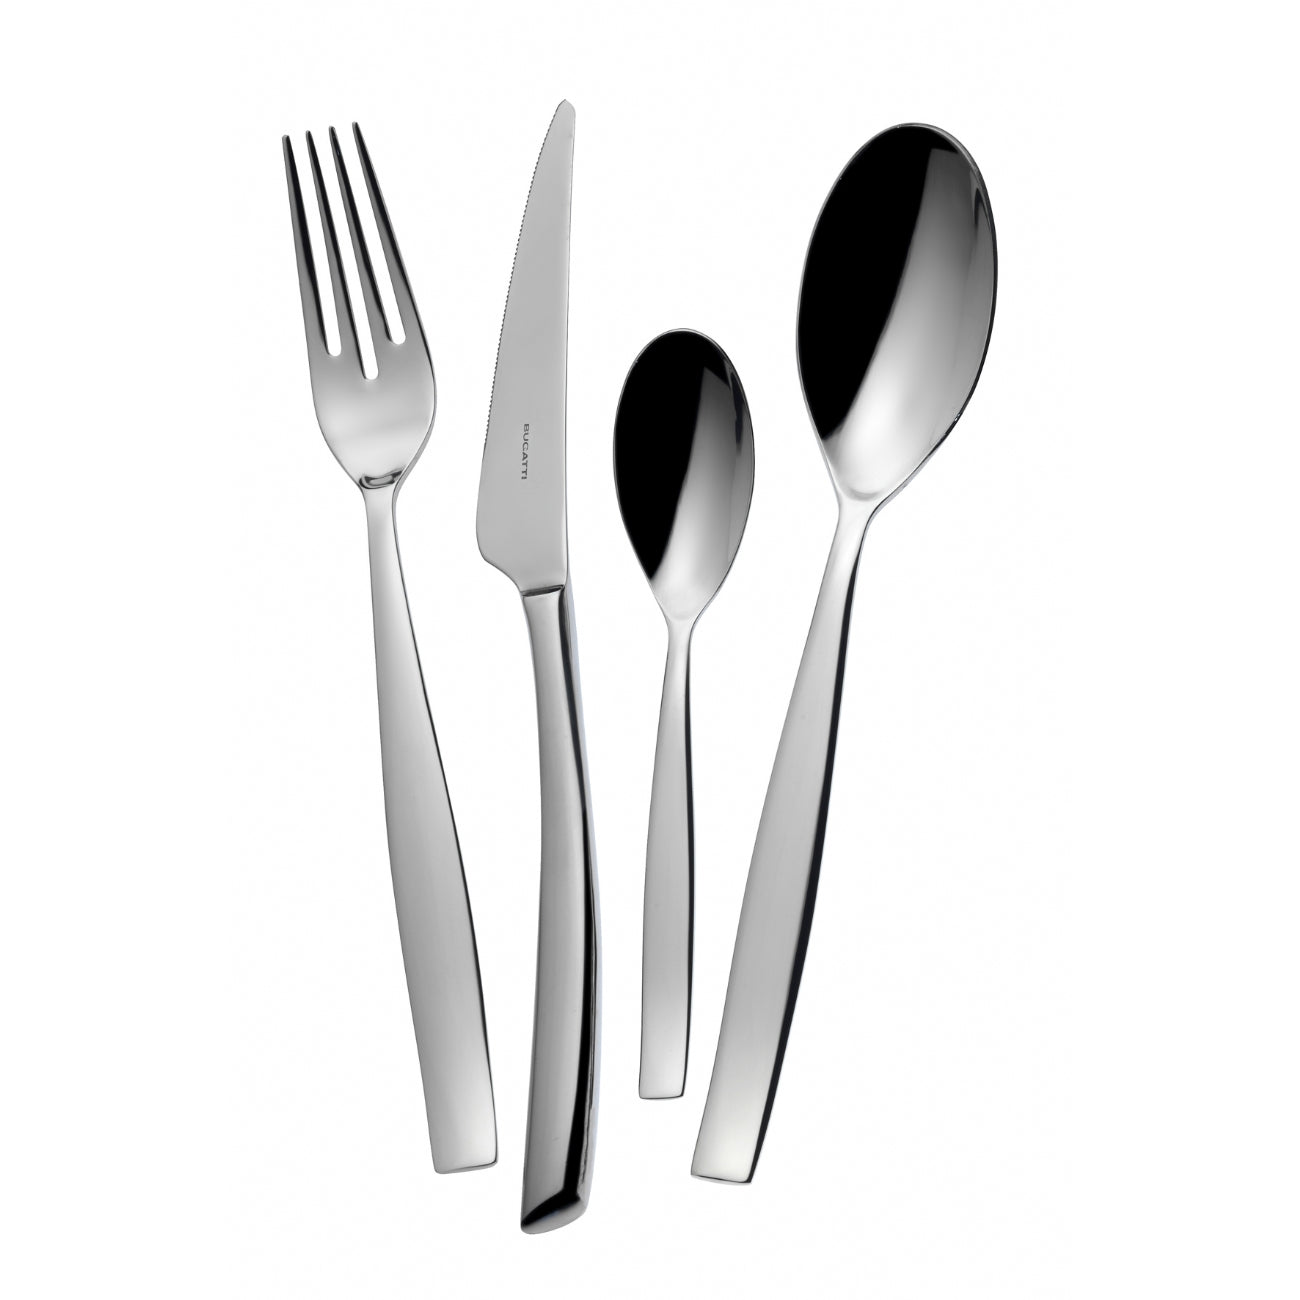 BUGATTI, Toscana, 24-piece cutlery set in 18/10 stainless steel